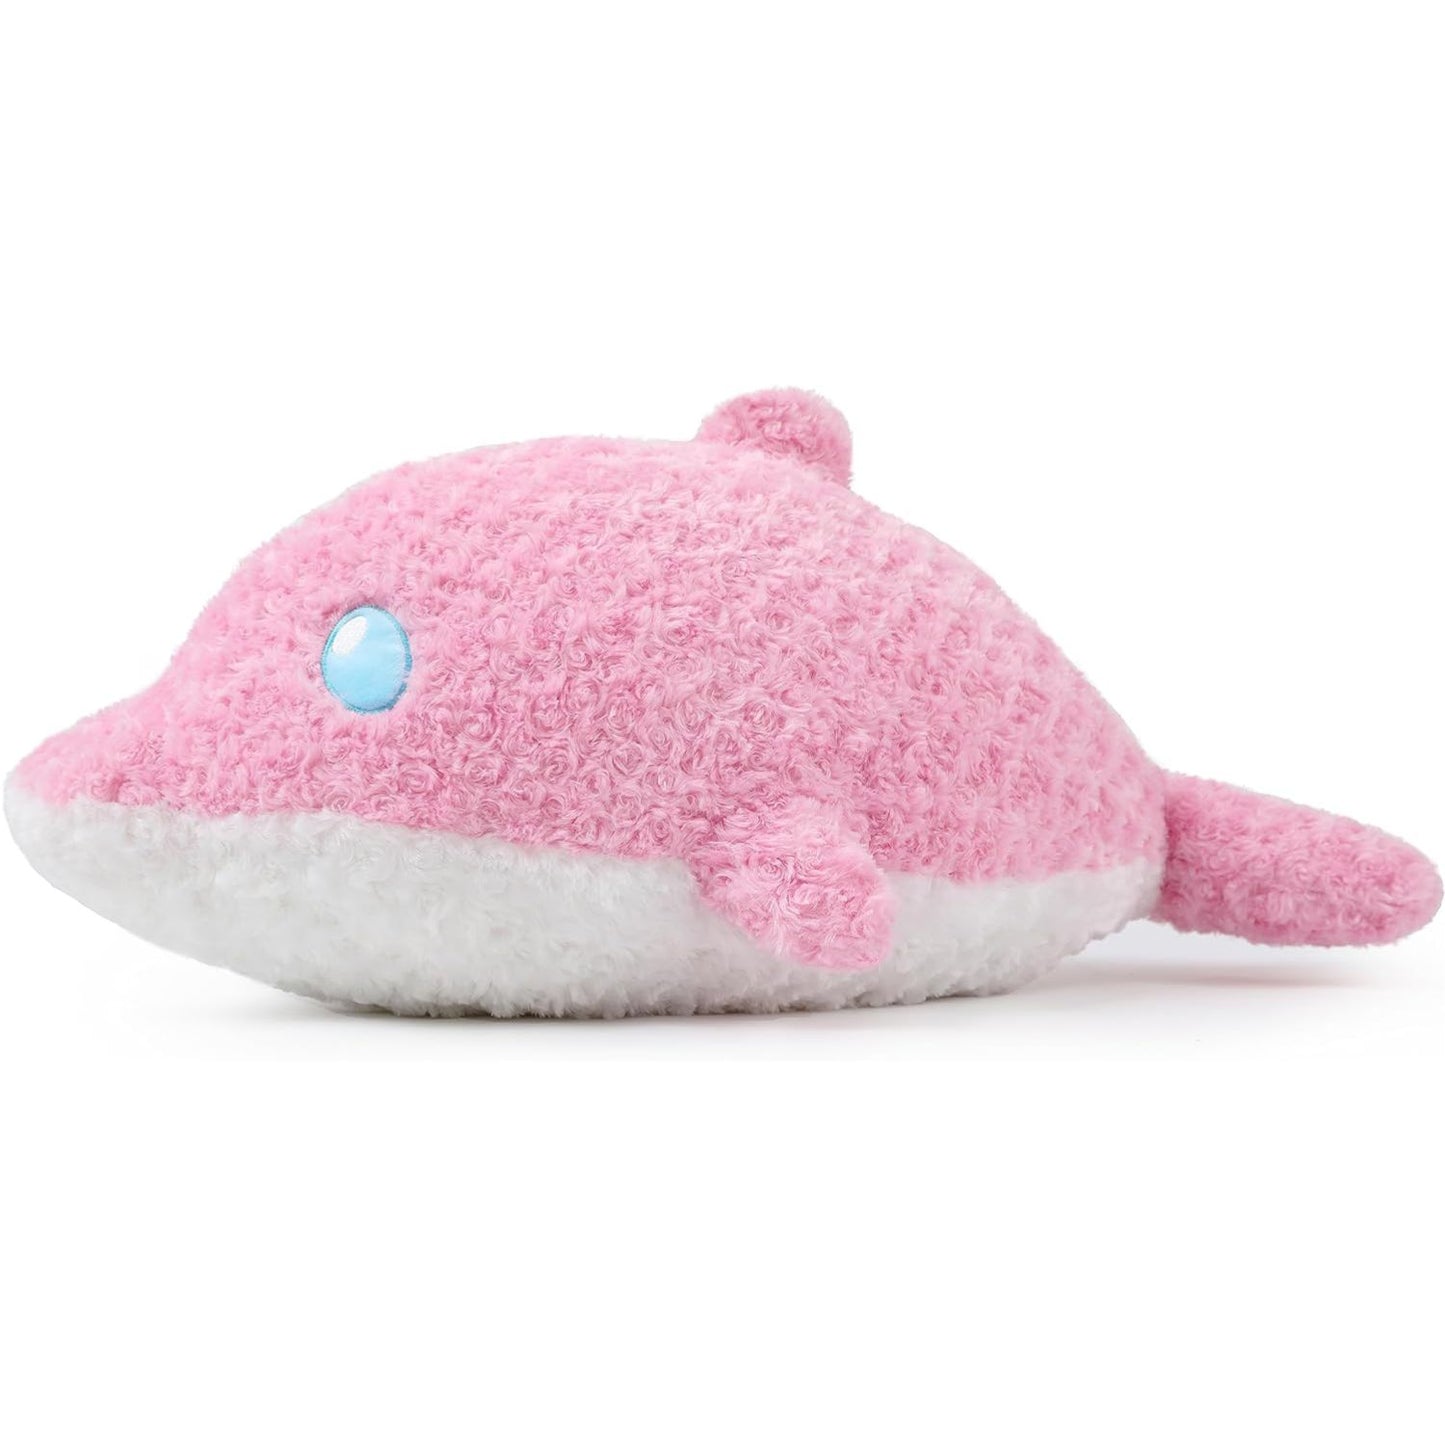 Dolphin Plush Toy Stuffed Animals, Pink, 31.5 Inches - MorisMos Stuffed Animals